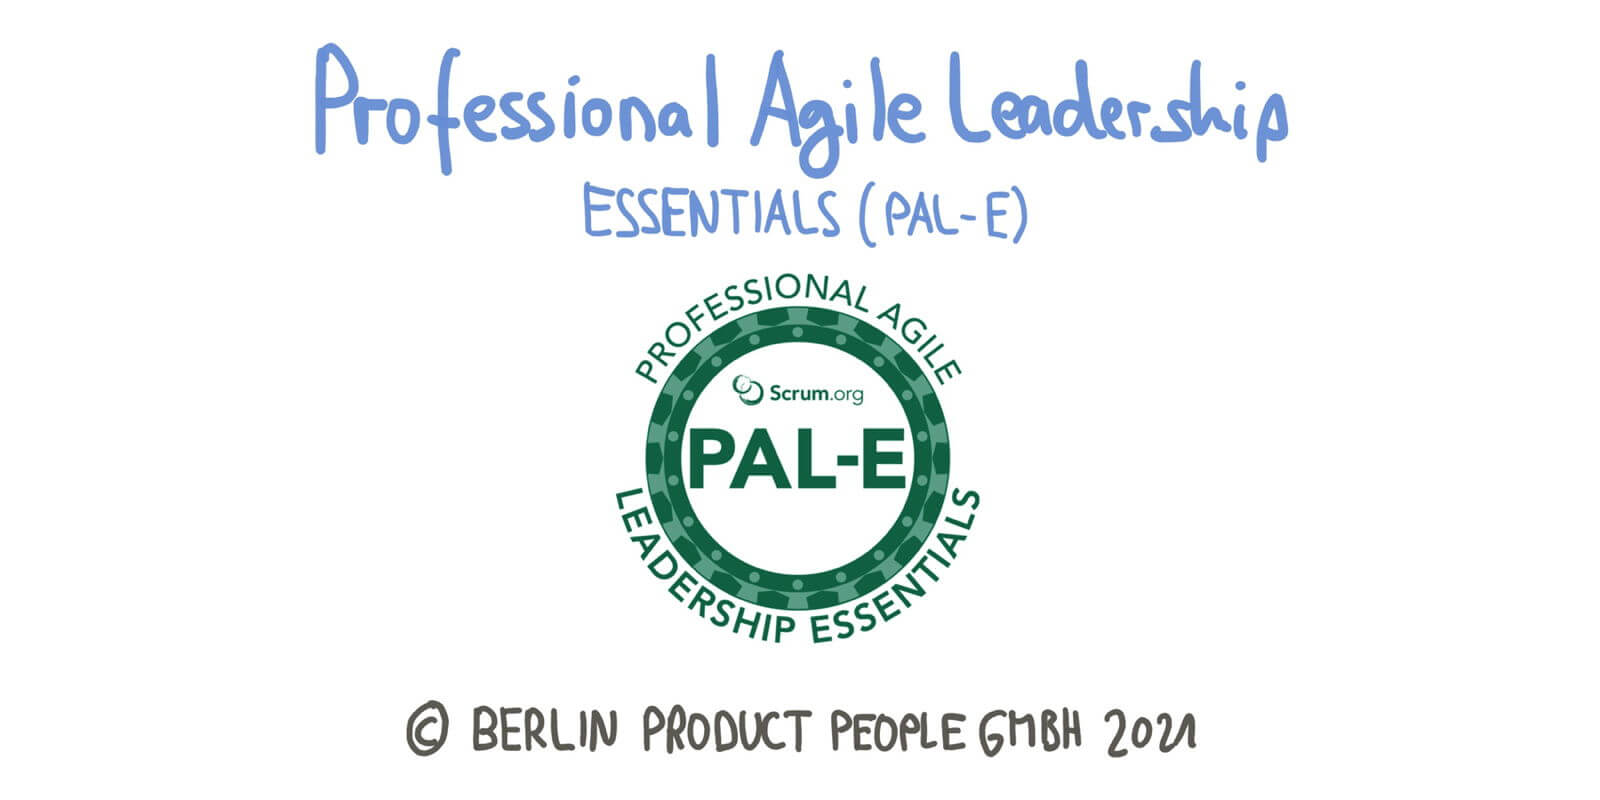 Professional Agile Leadership Essentials Training — Berlin Product People GmbH